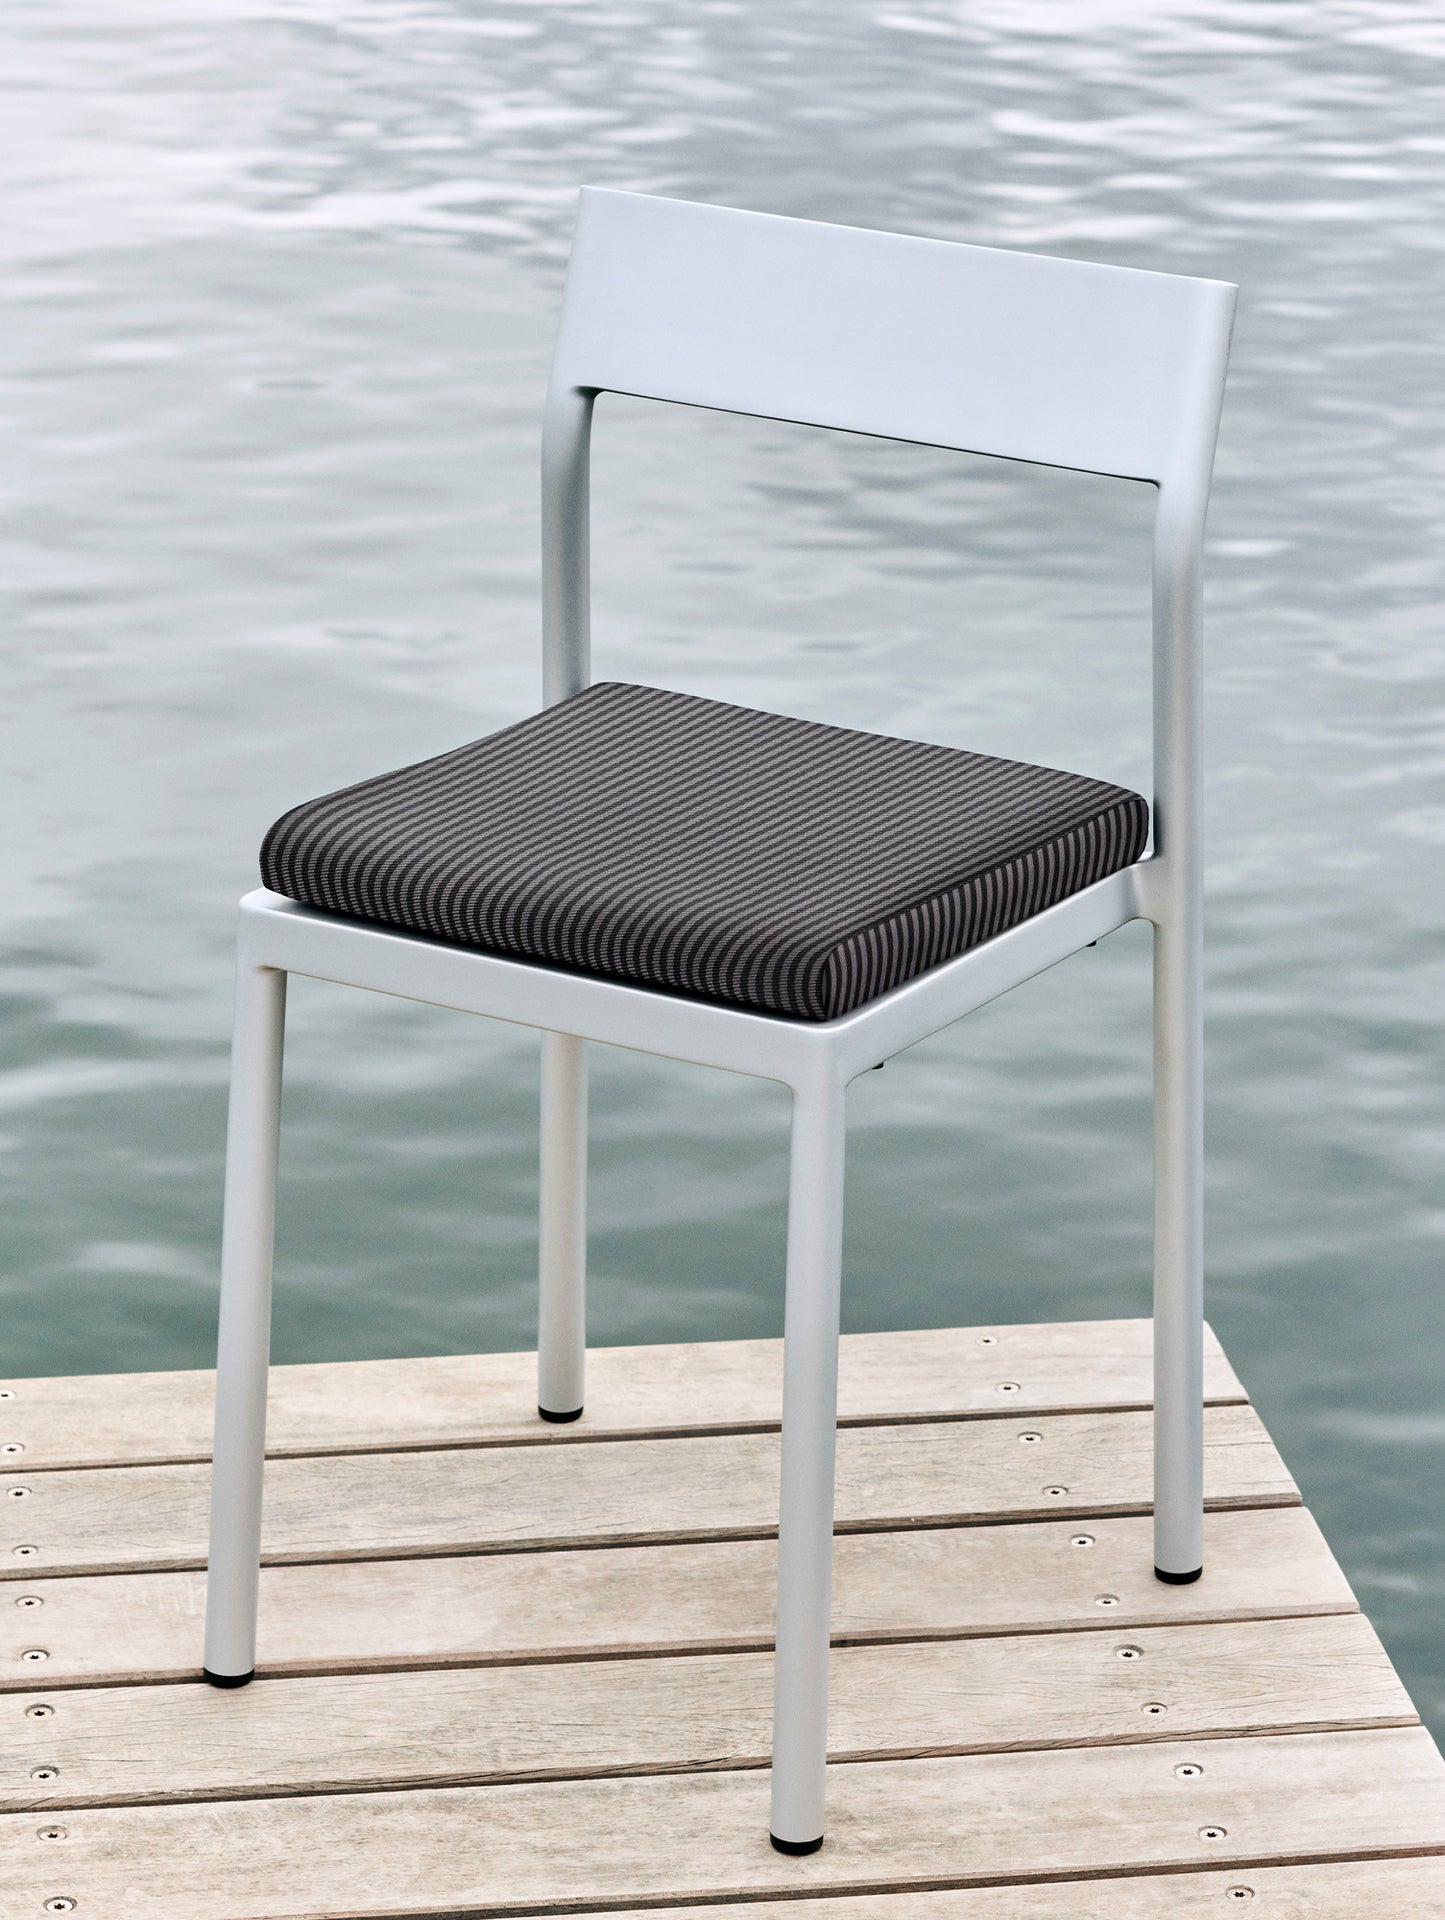 Type Chair Seat Cushion by HAY - Grey Black Stripe